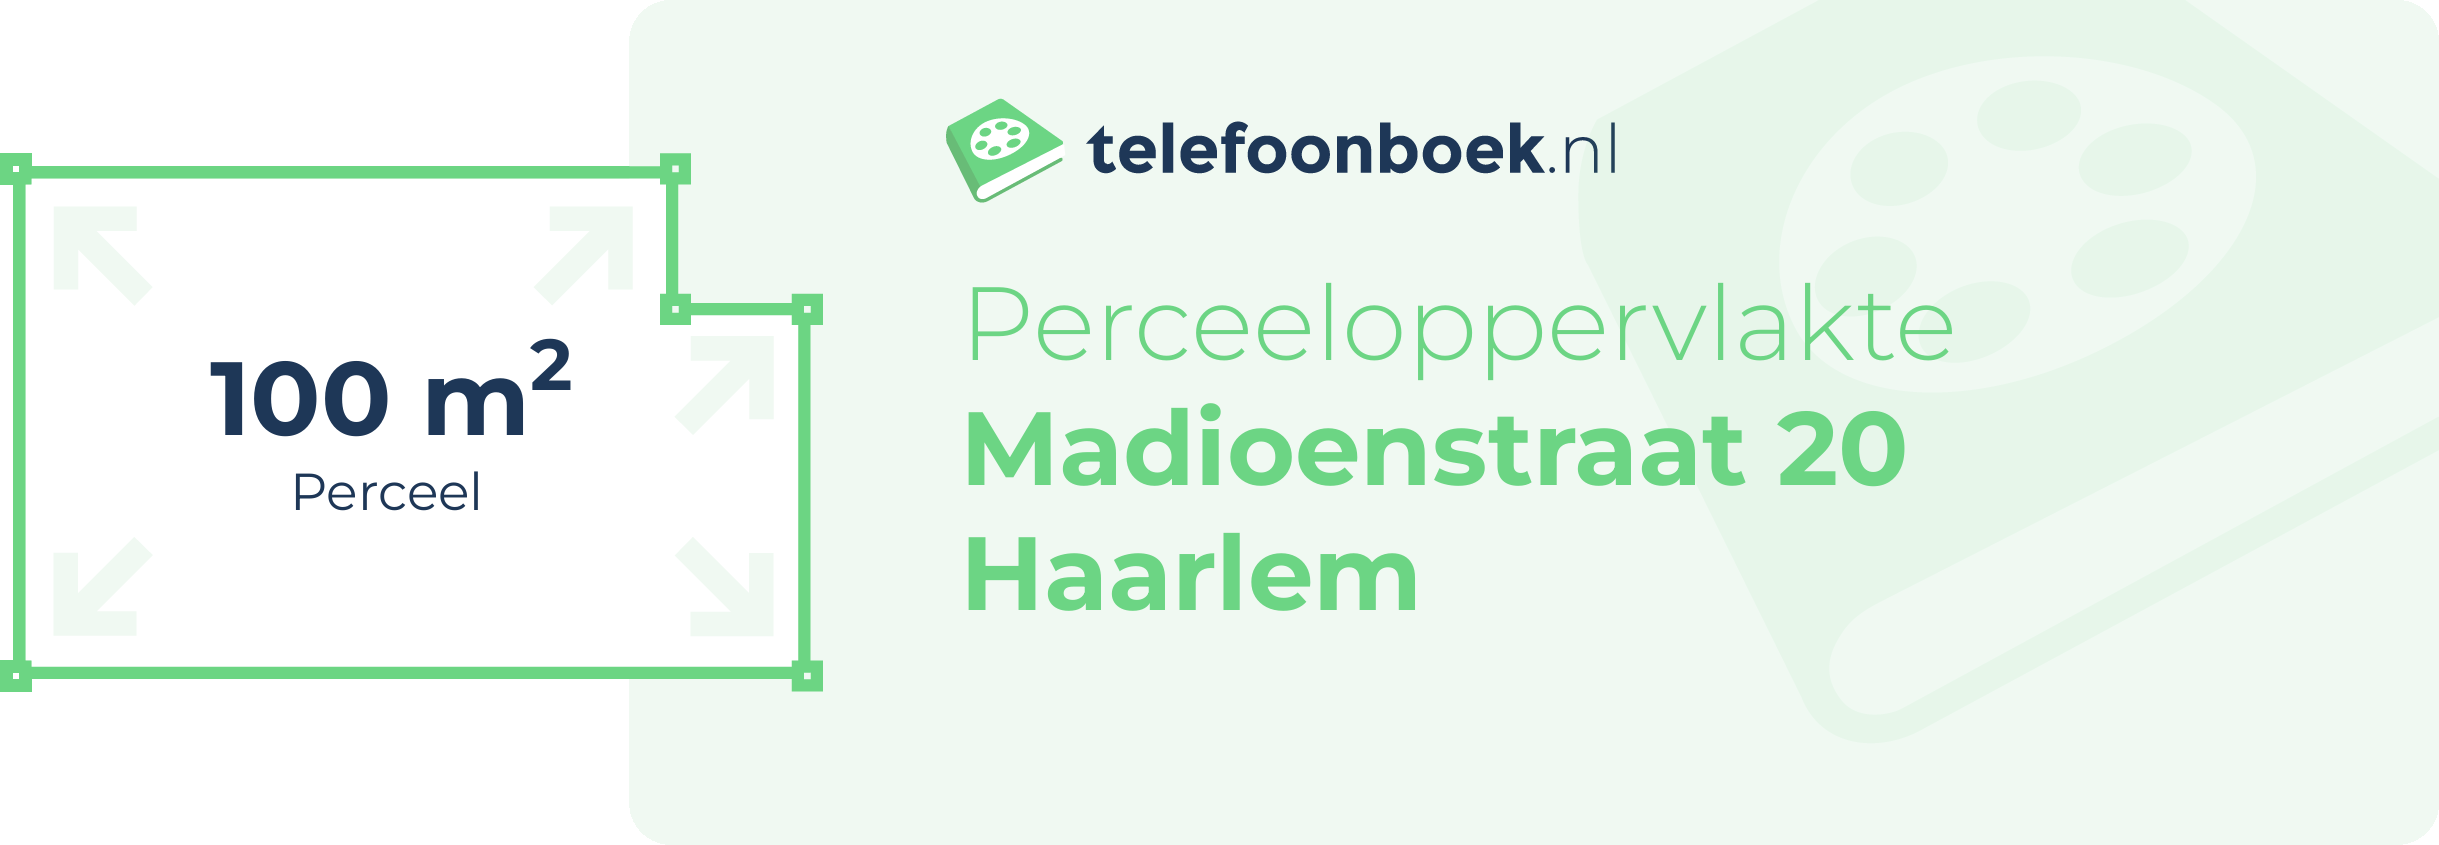 Perceeloppervlakte Madioenstraat 20 Haarlem